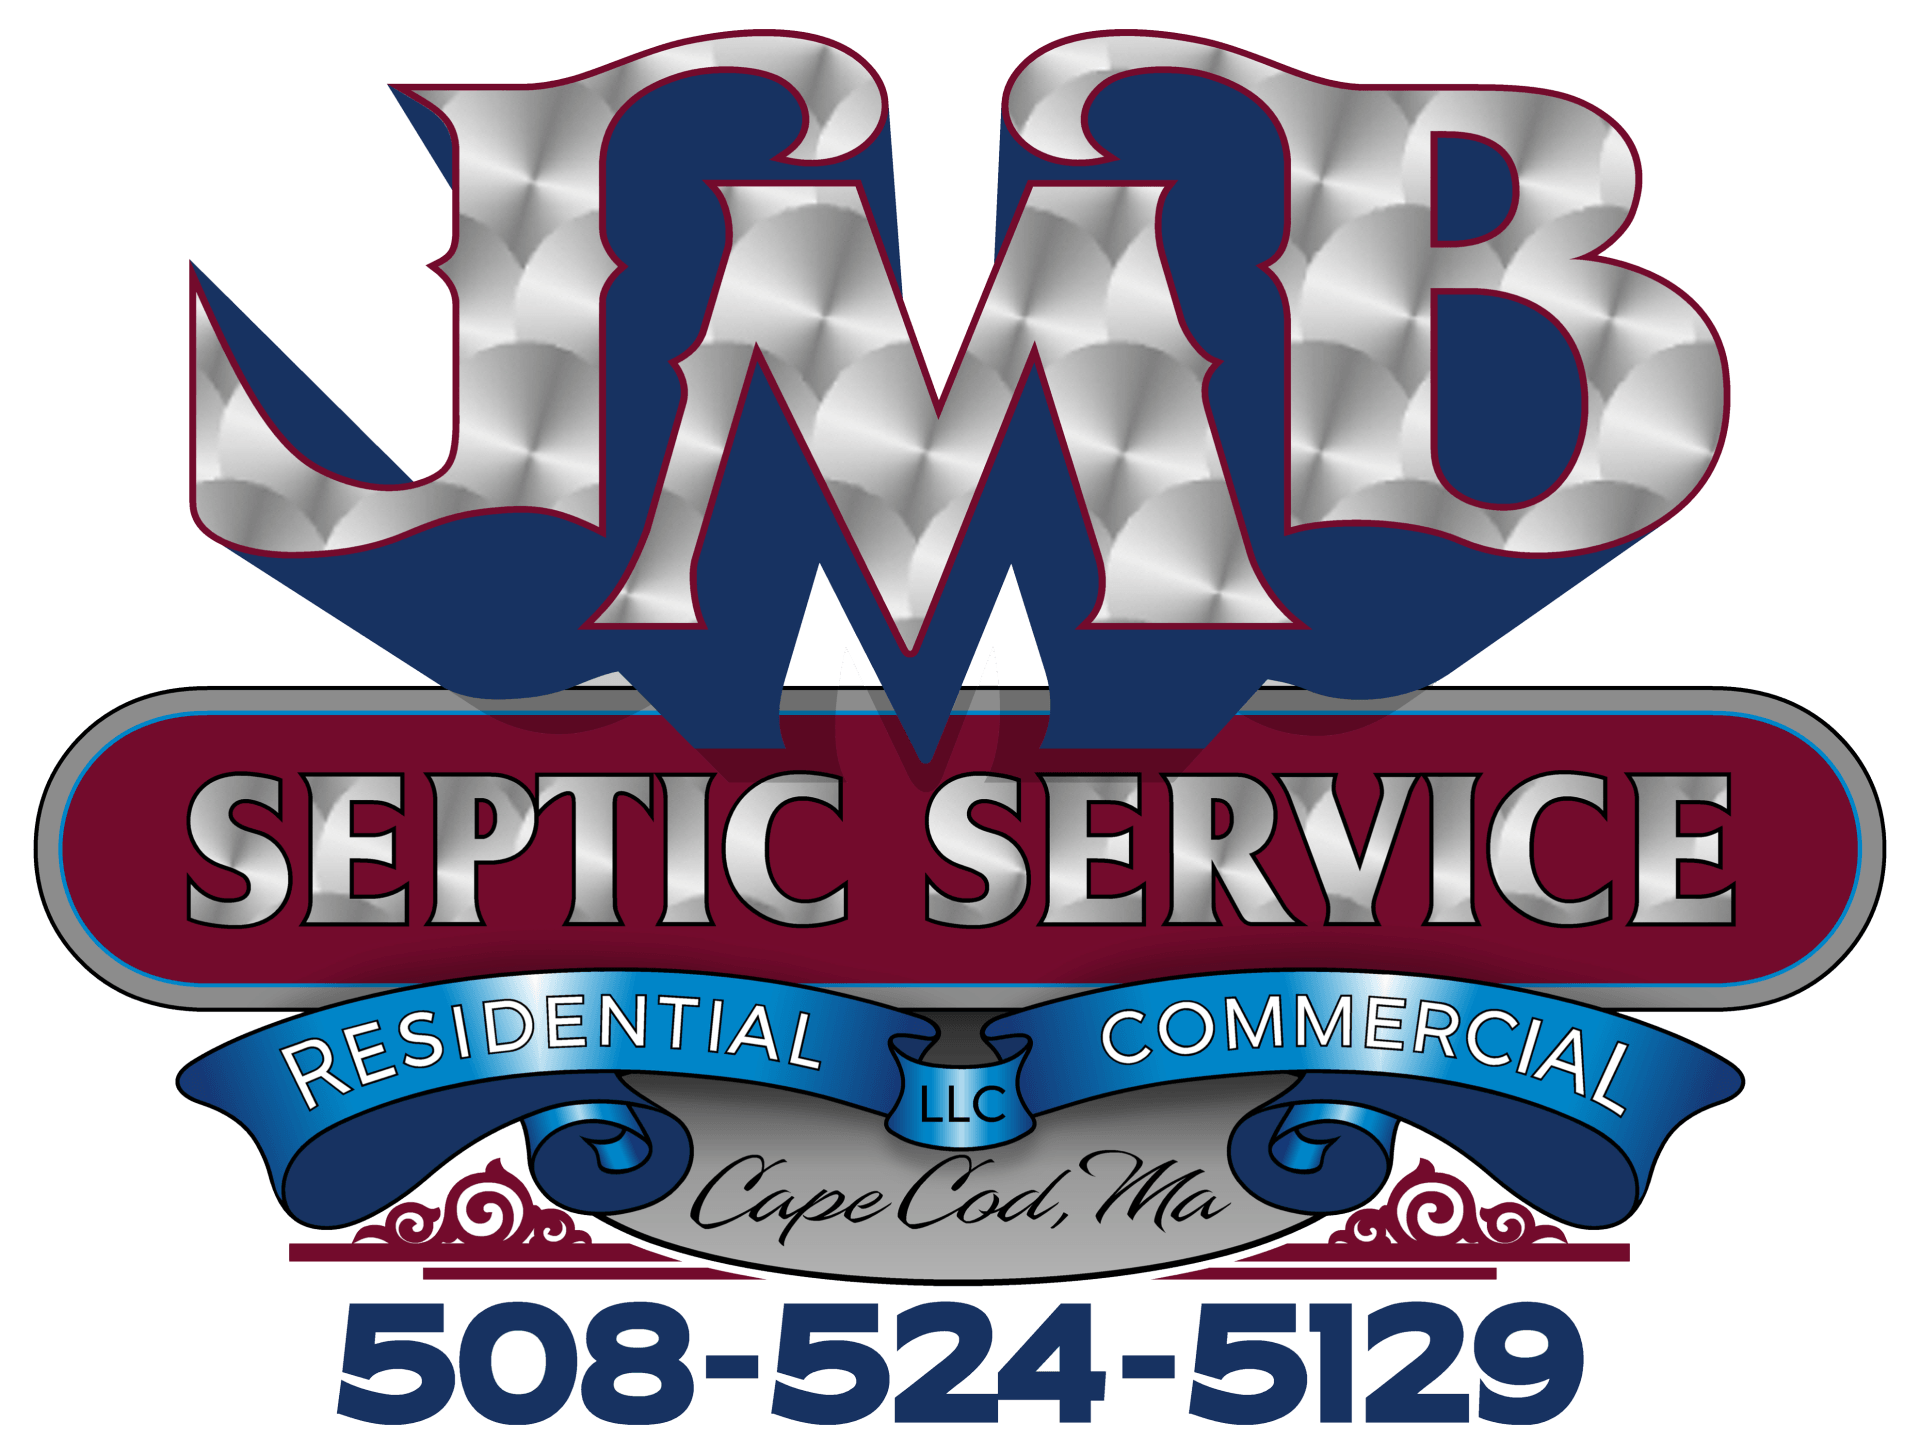 Josh M. Barros Septic Service